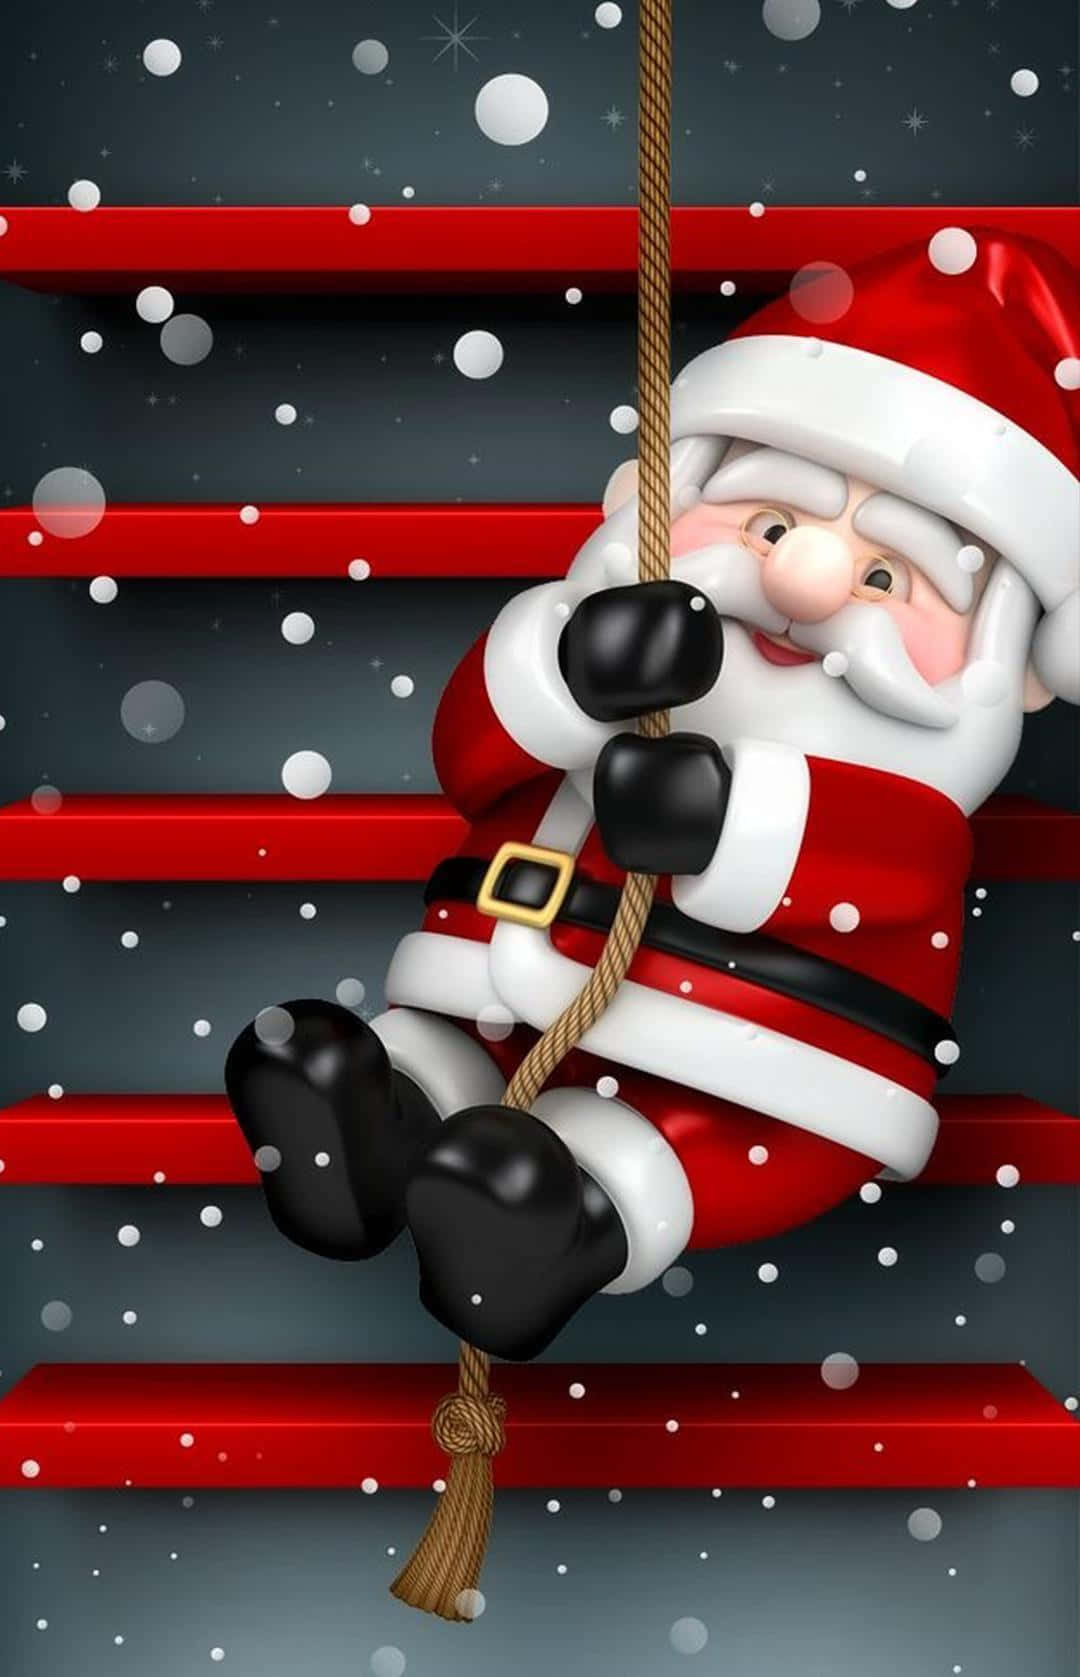 Jolly Santa Claus spreading festive cheer! Wallpaper